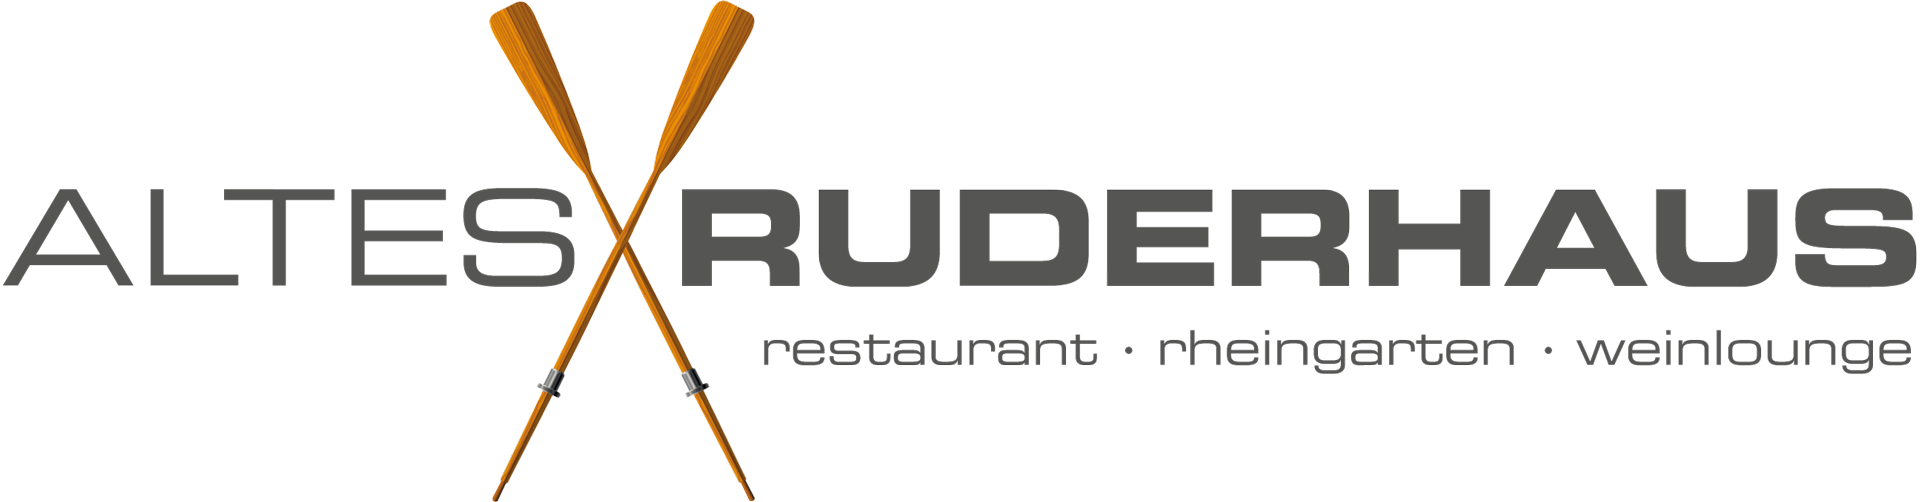 Logo Altes Ruderhaus Restaurant Biergarten